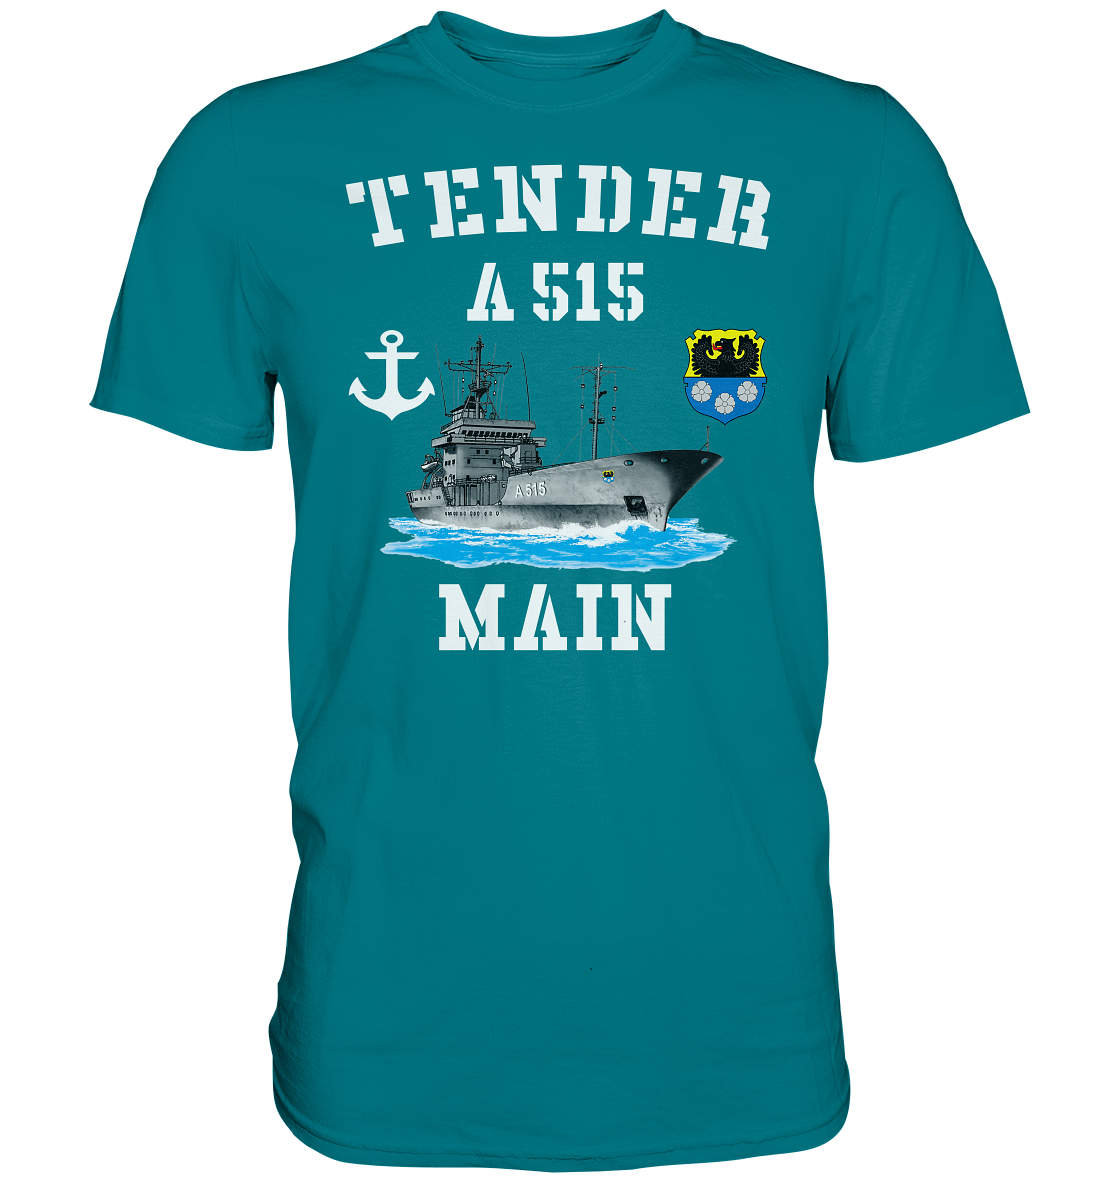 Tender A515 MAIN Anker - Premium Shirt